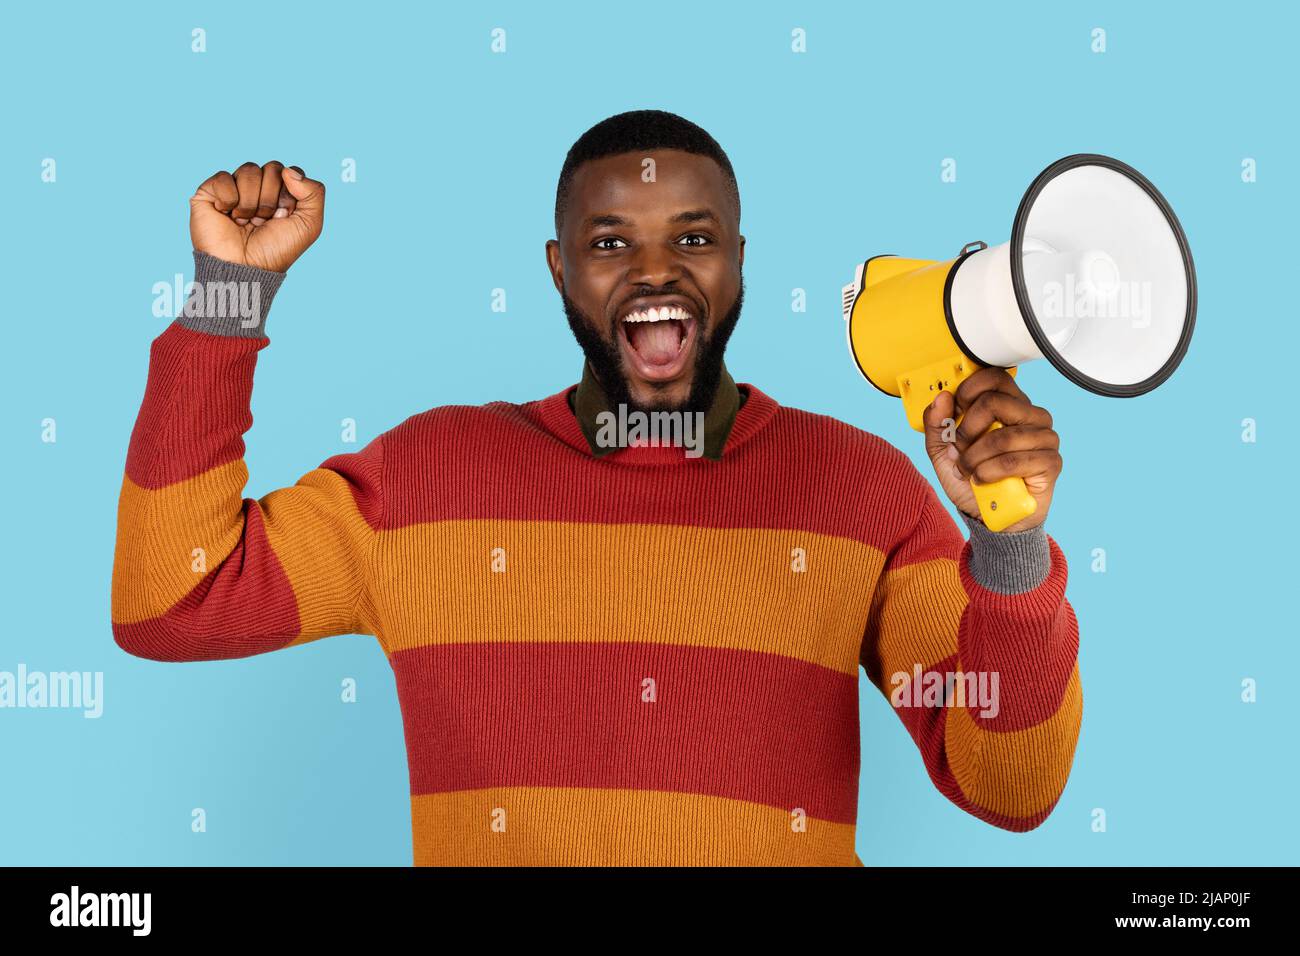 Portrait Of Joyful Black Man With Megaphone In Hands Making Announcement Stock Photo